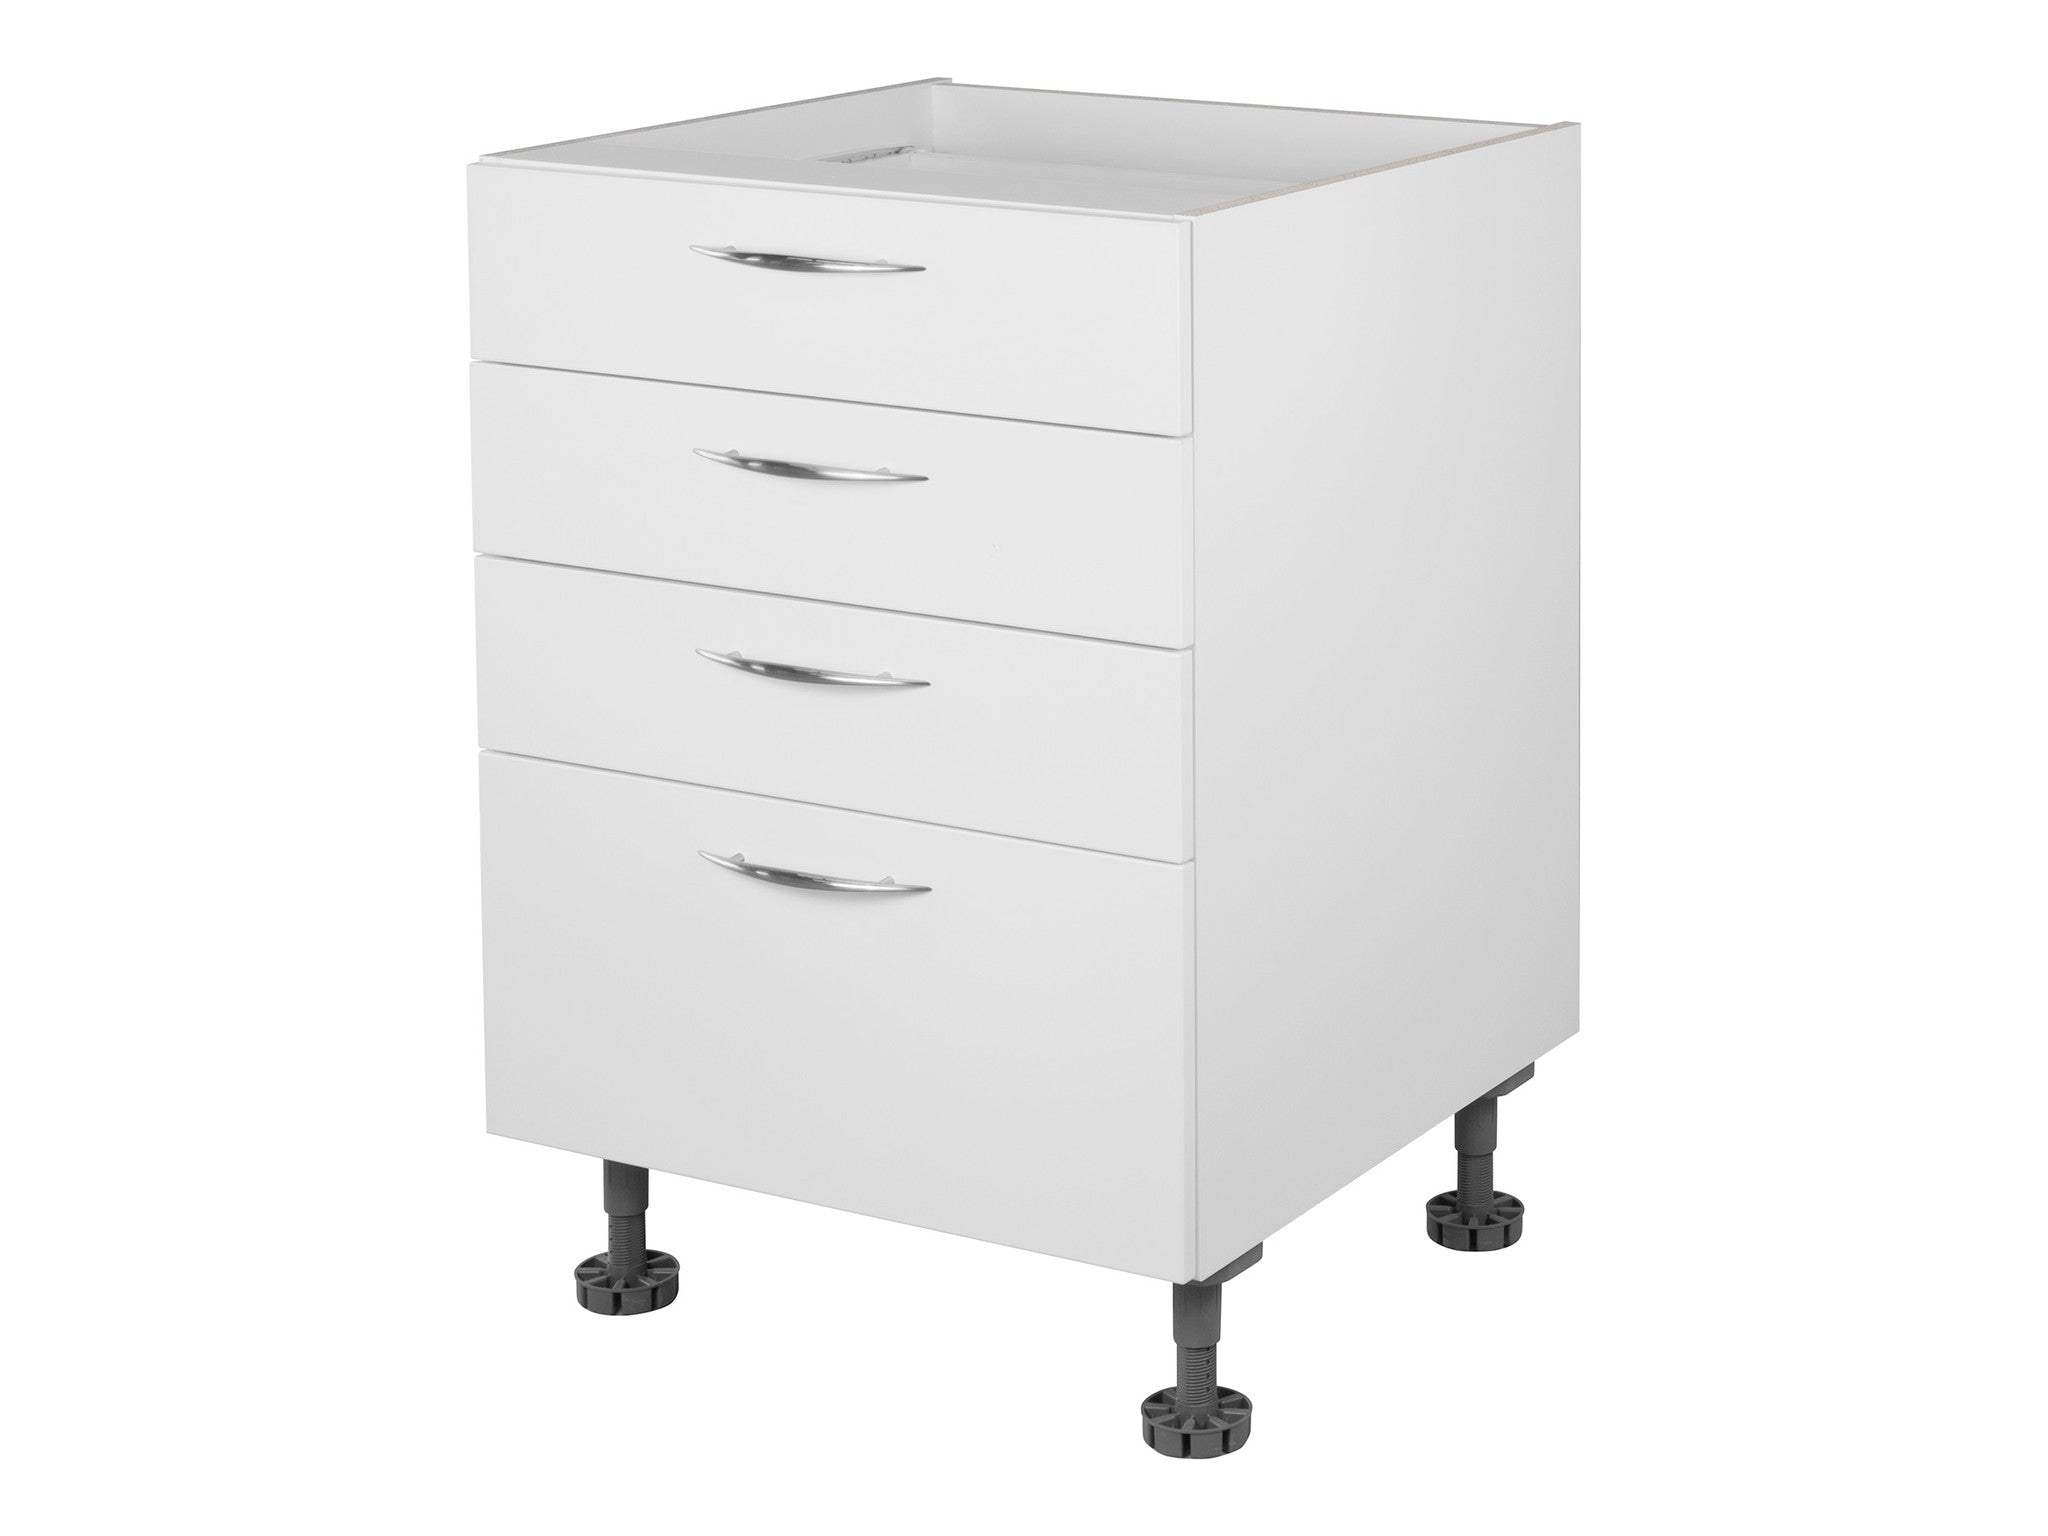 4 Drawer Base Cabinet | Cabjaks